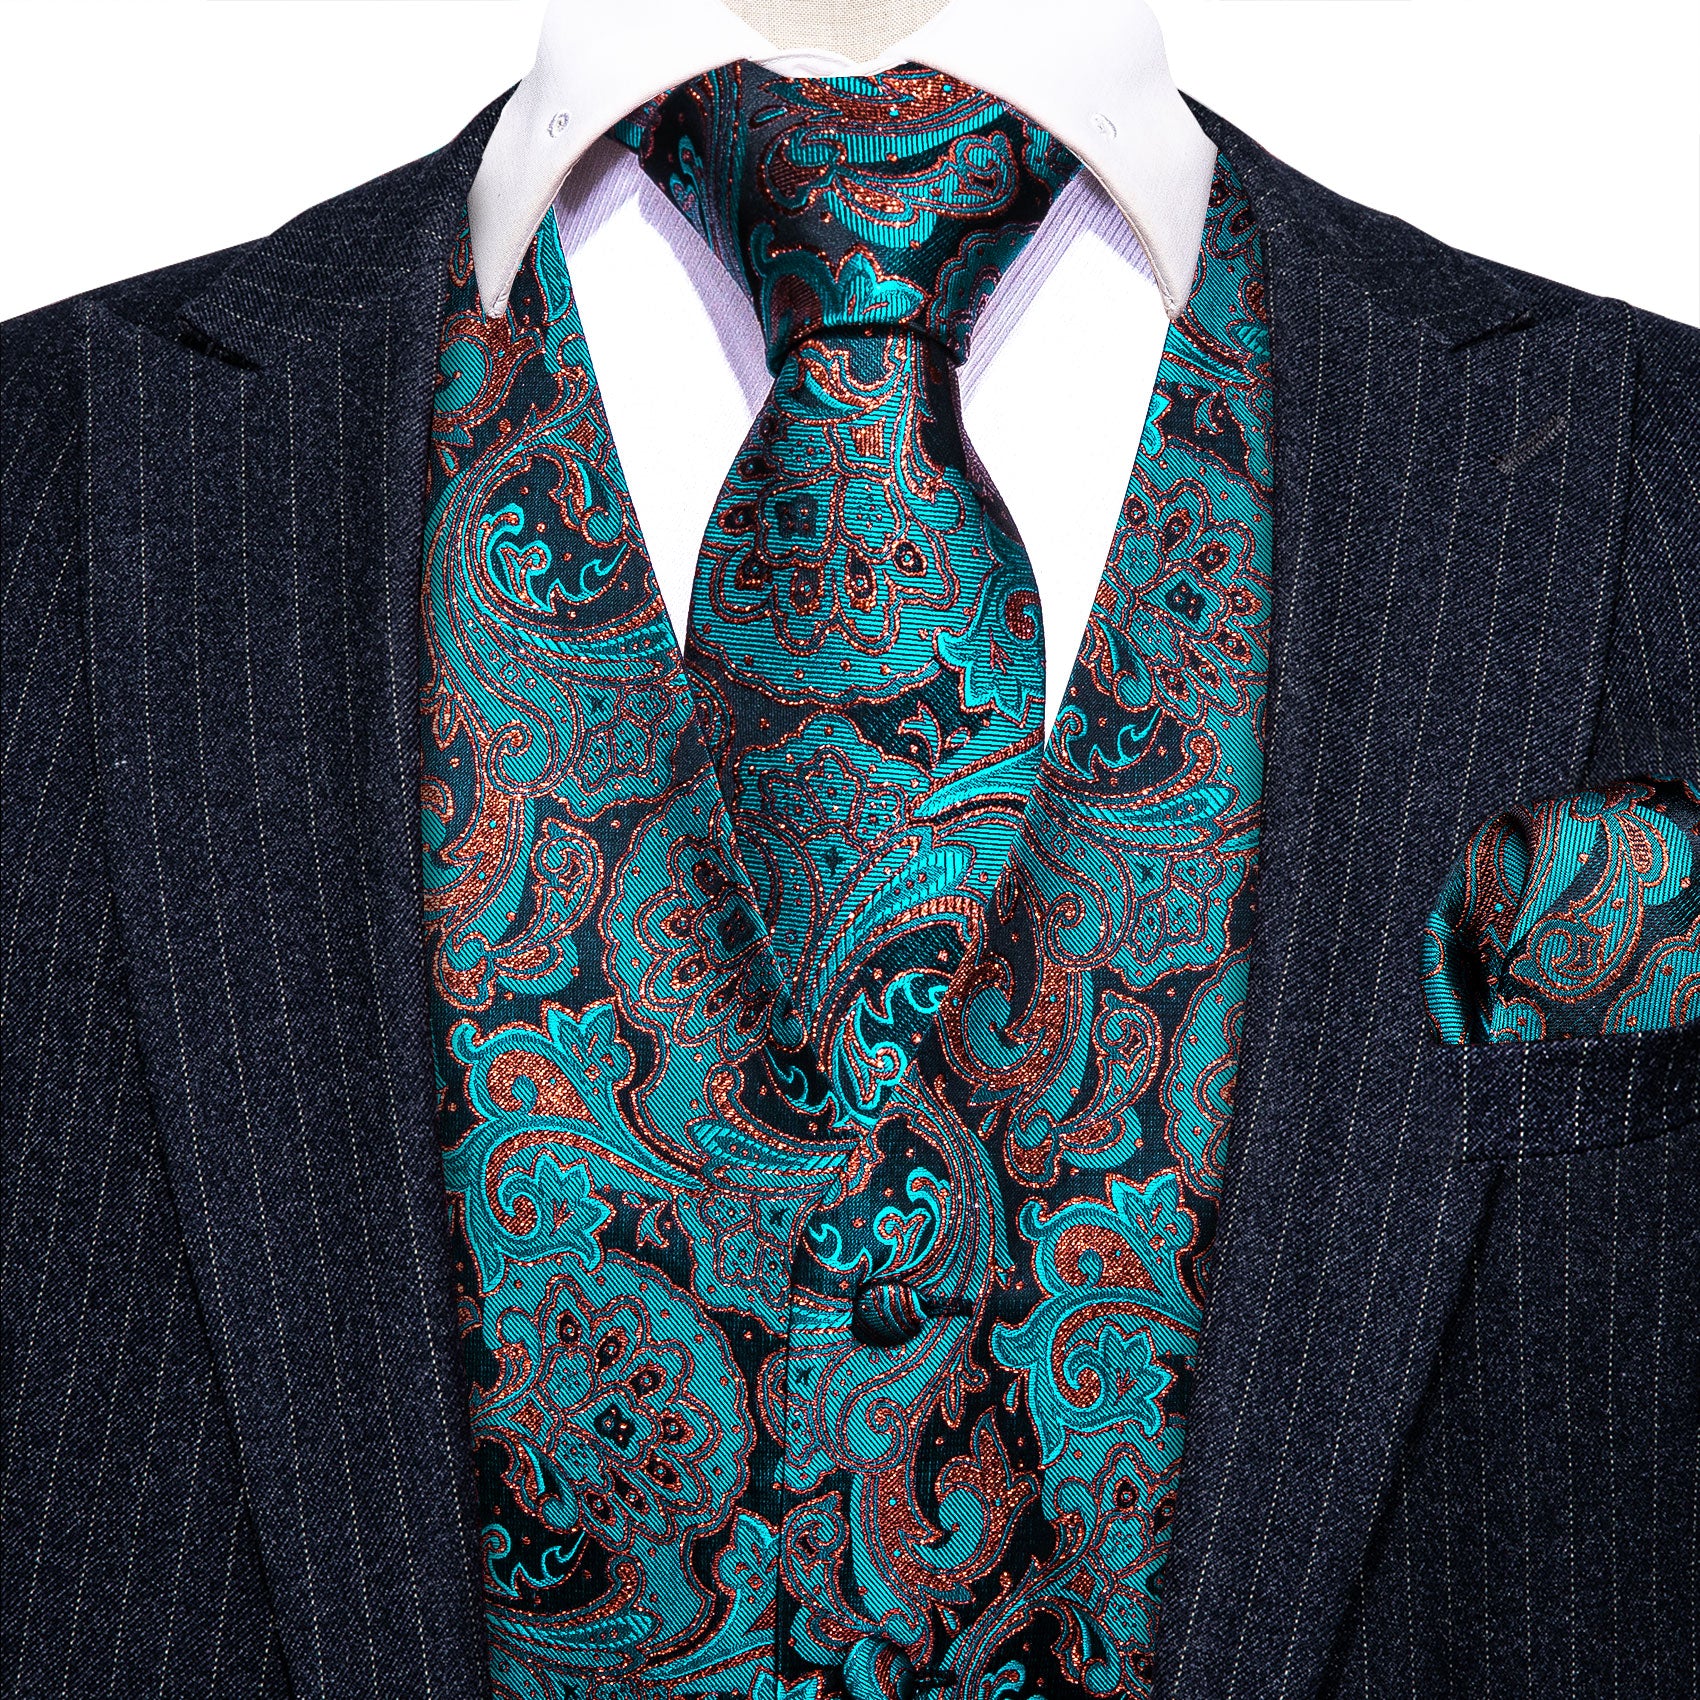 Classy Blue Black Paisley Silk Vest Necktie Pocket Square Cufflinks Set